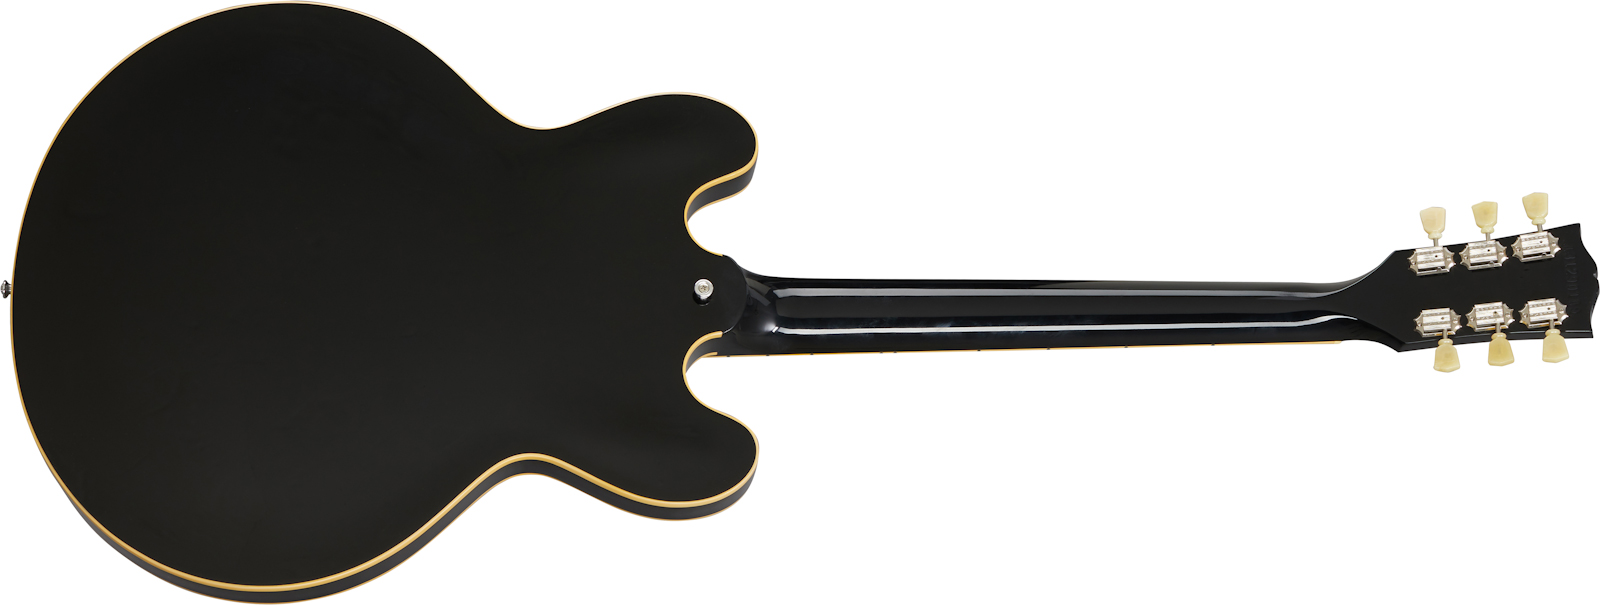 Gibson Es-335 Dot Original 2020 2h Ht Rw - Vintage Ebony - Semi-hollow electric guitar - Variation 1